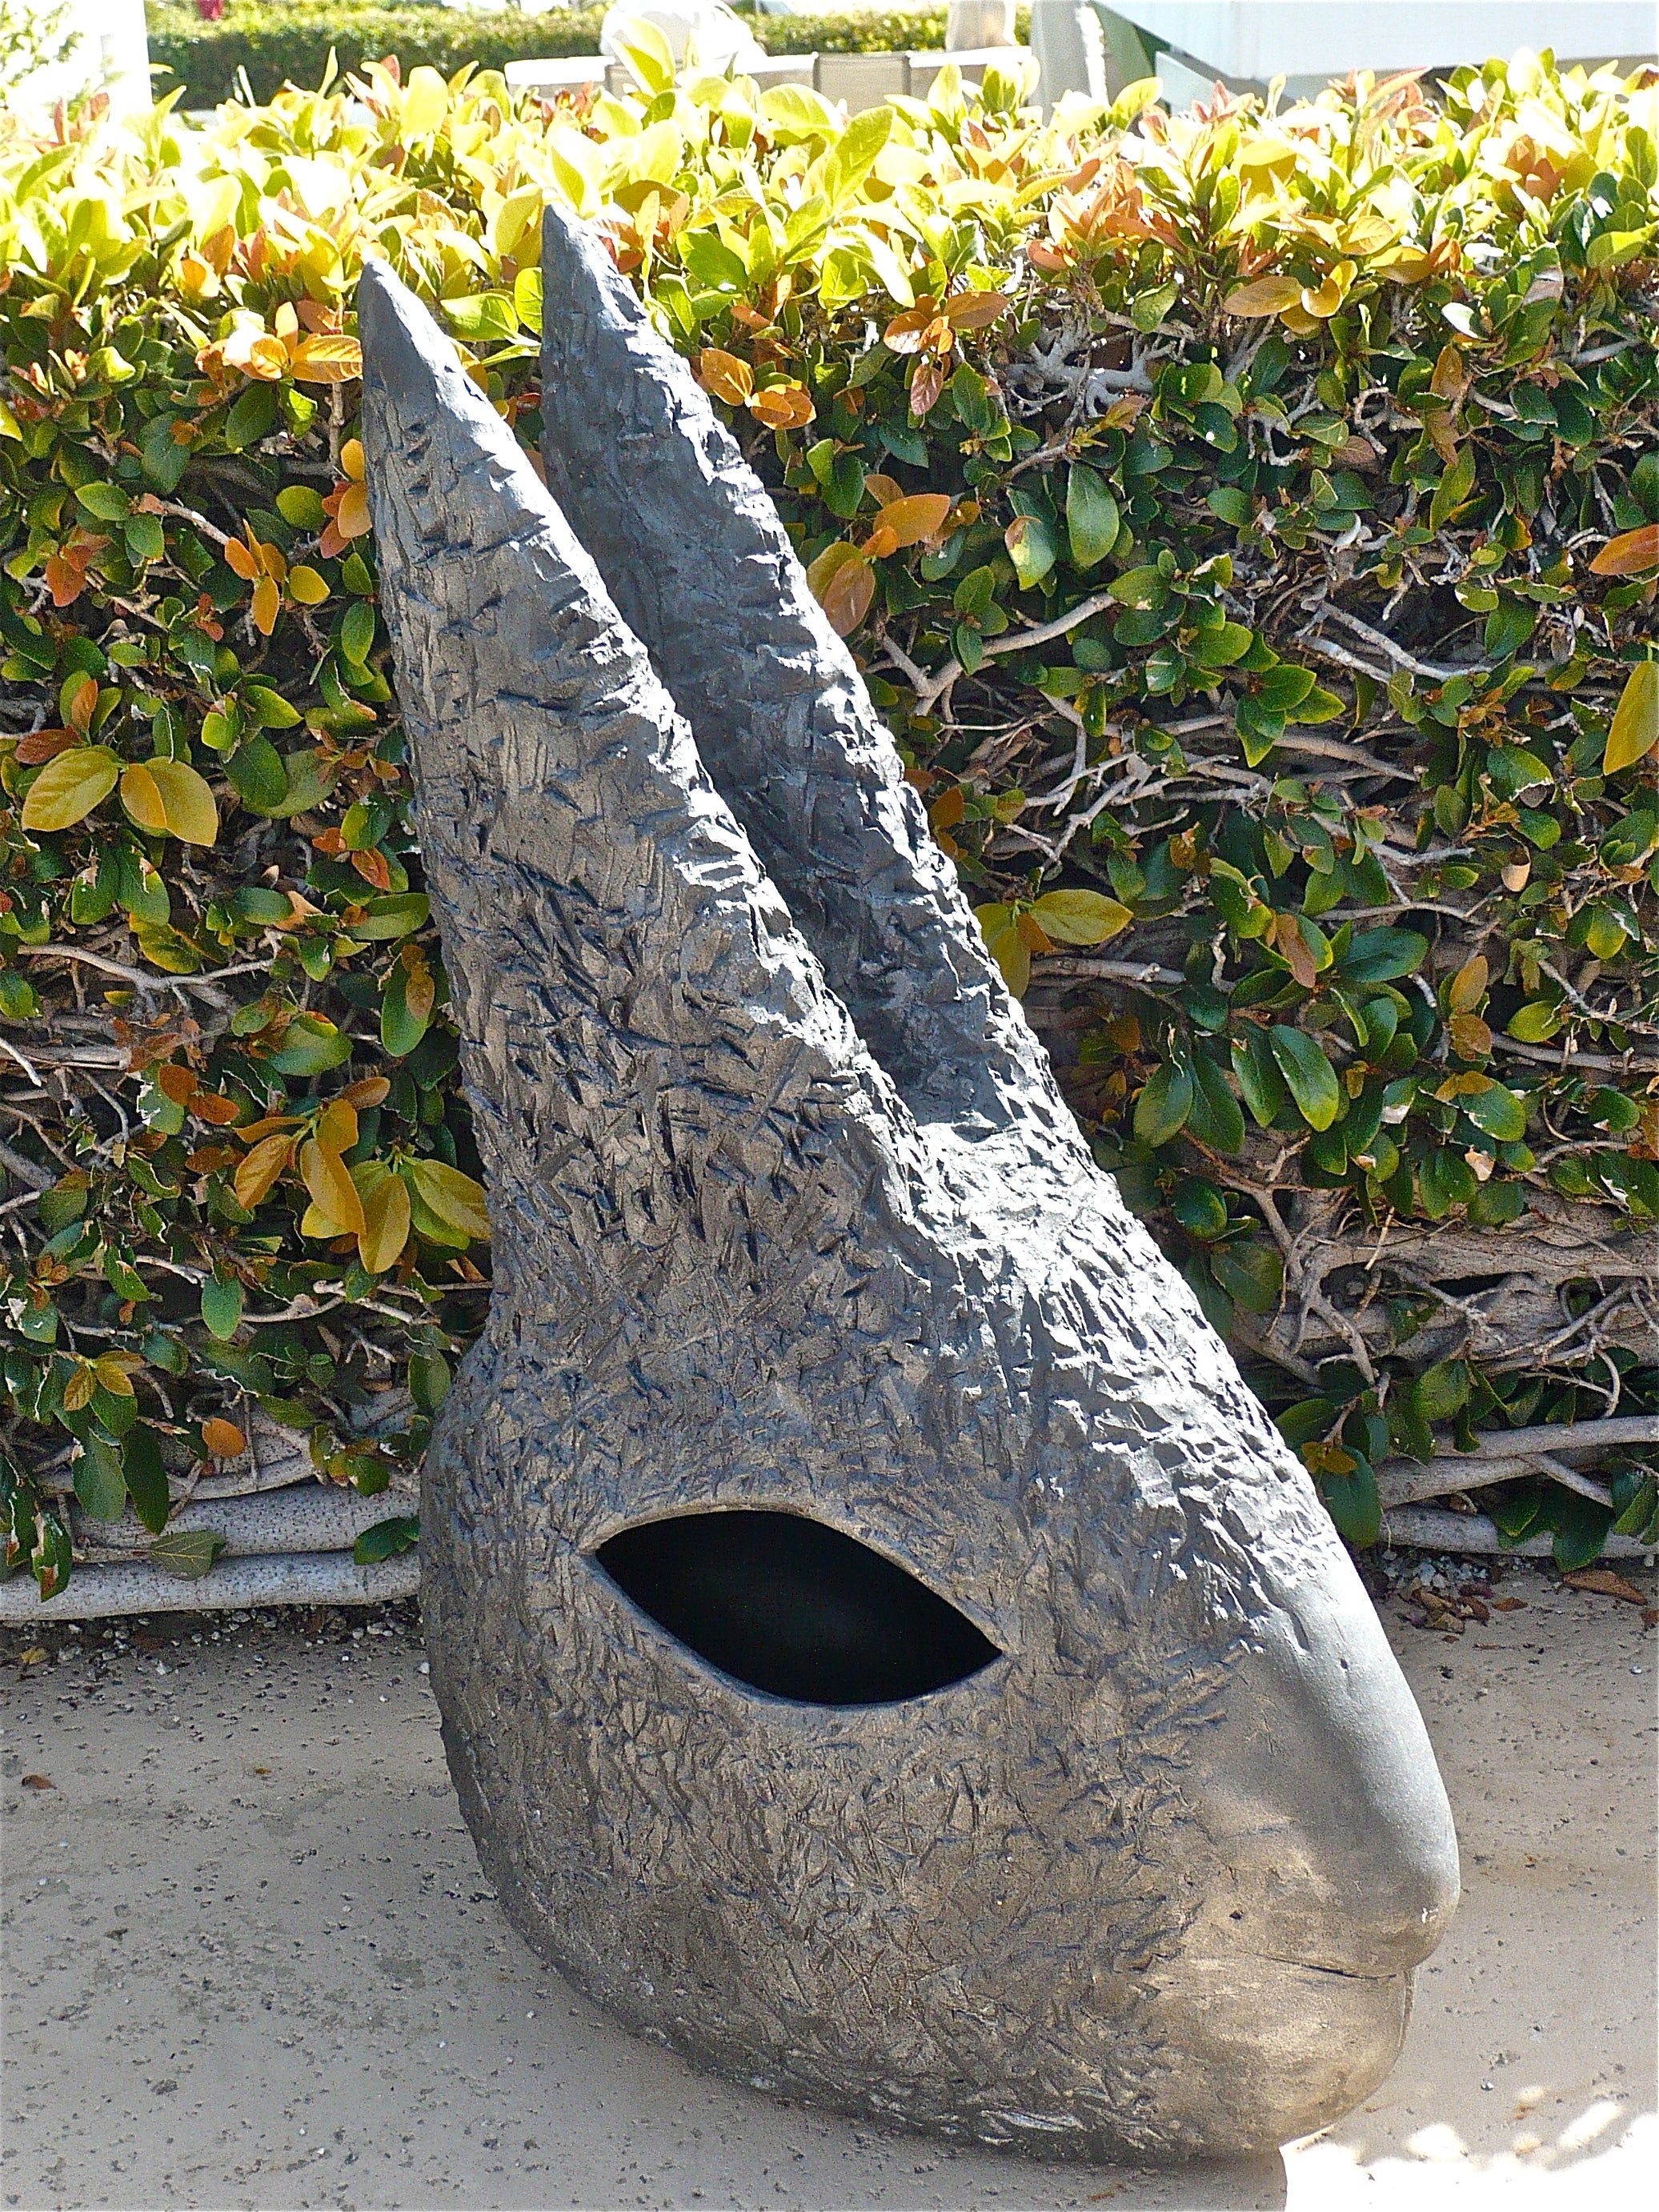 Large Scale Ceramic Rabbit's Head by Deborah Masuoka